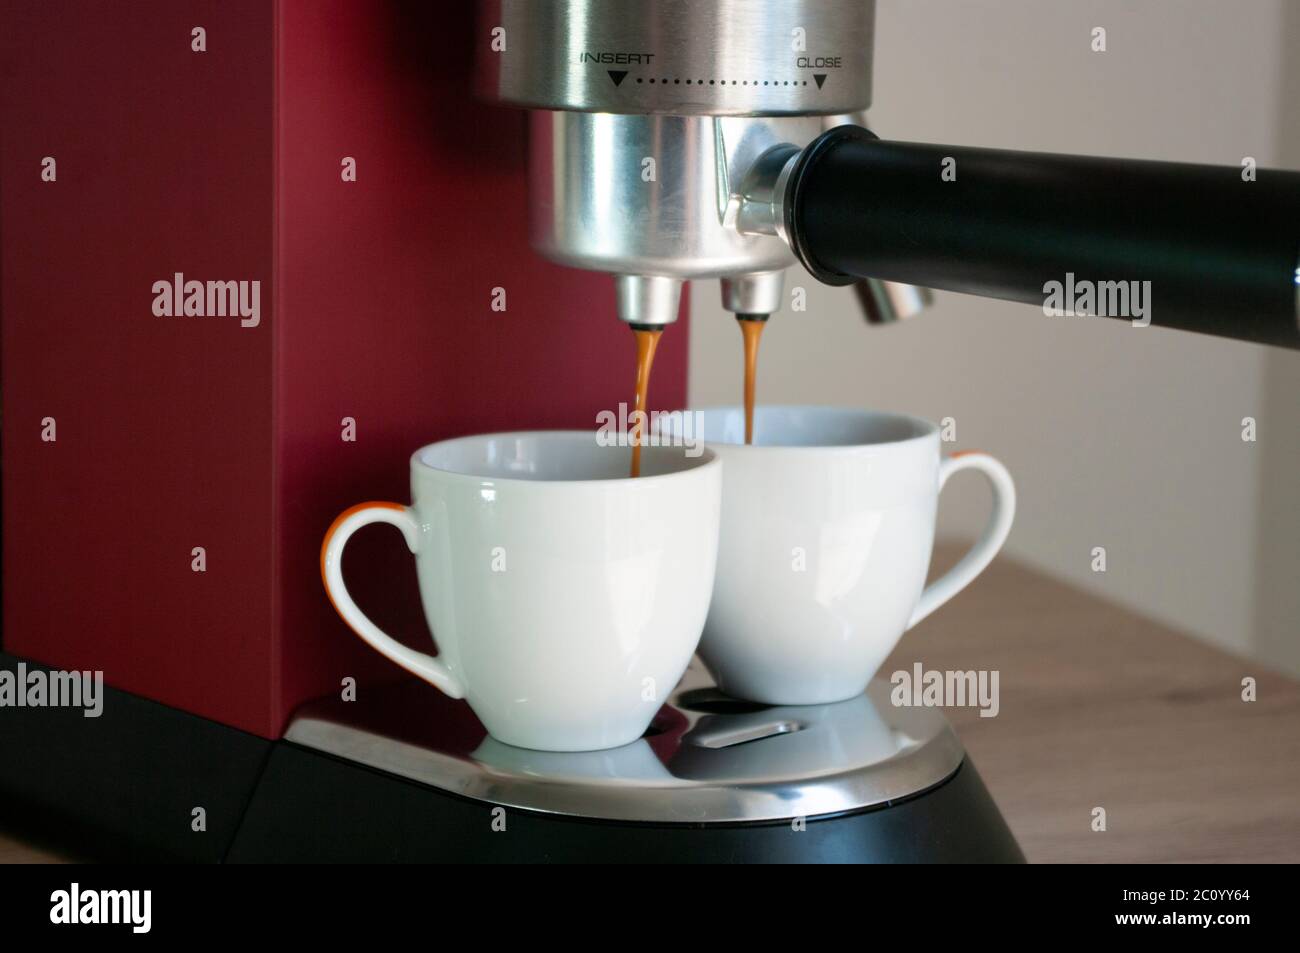 https://c8.alamy.com/comp/2C0YY64/red-coffee-machine-and-two-cups-mockup-espresso-make-2C0YY64.jpg